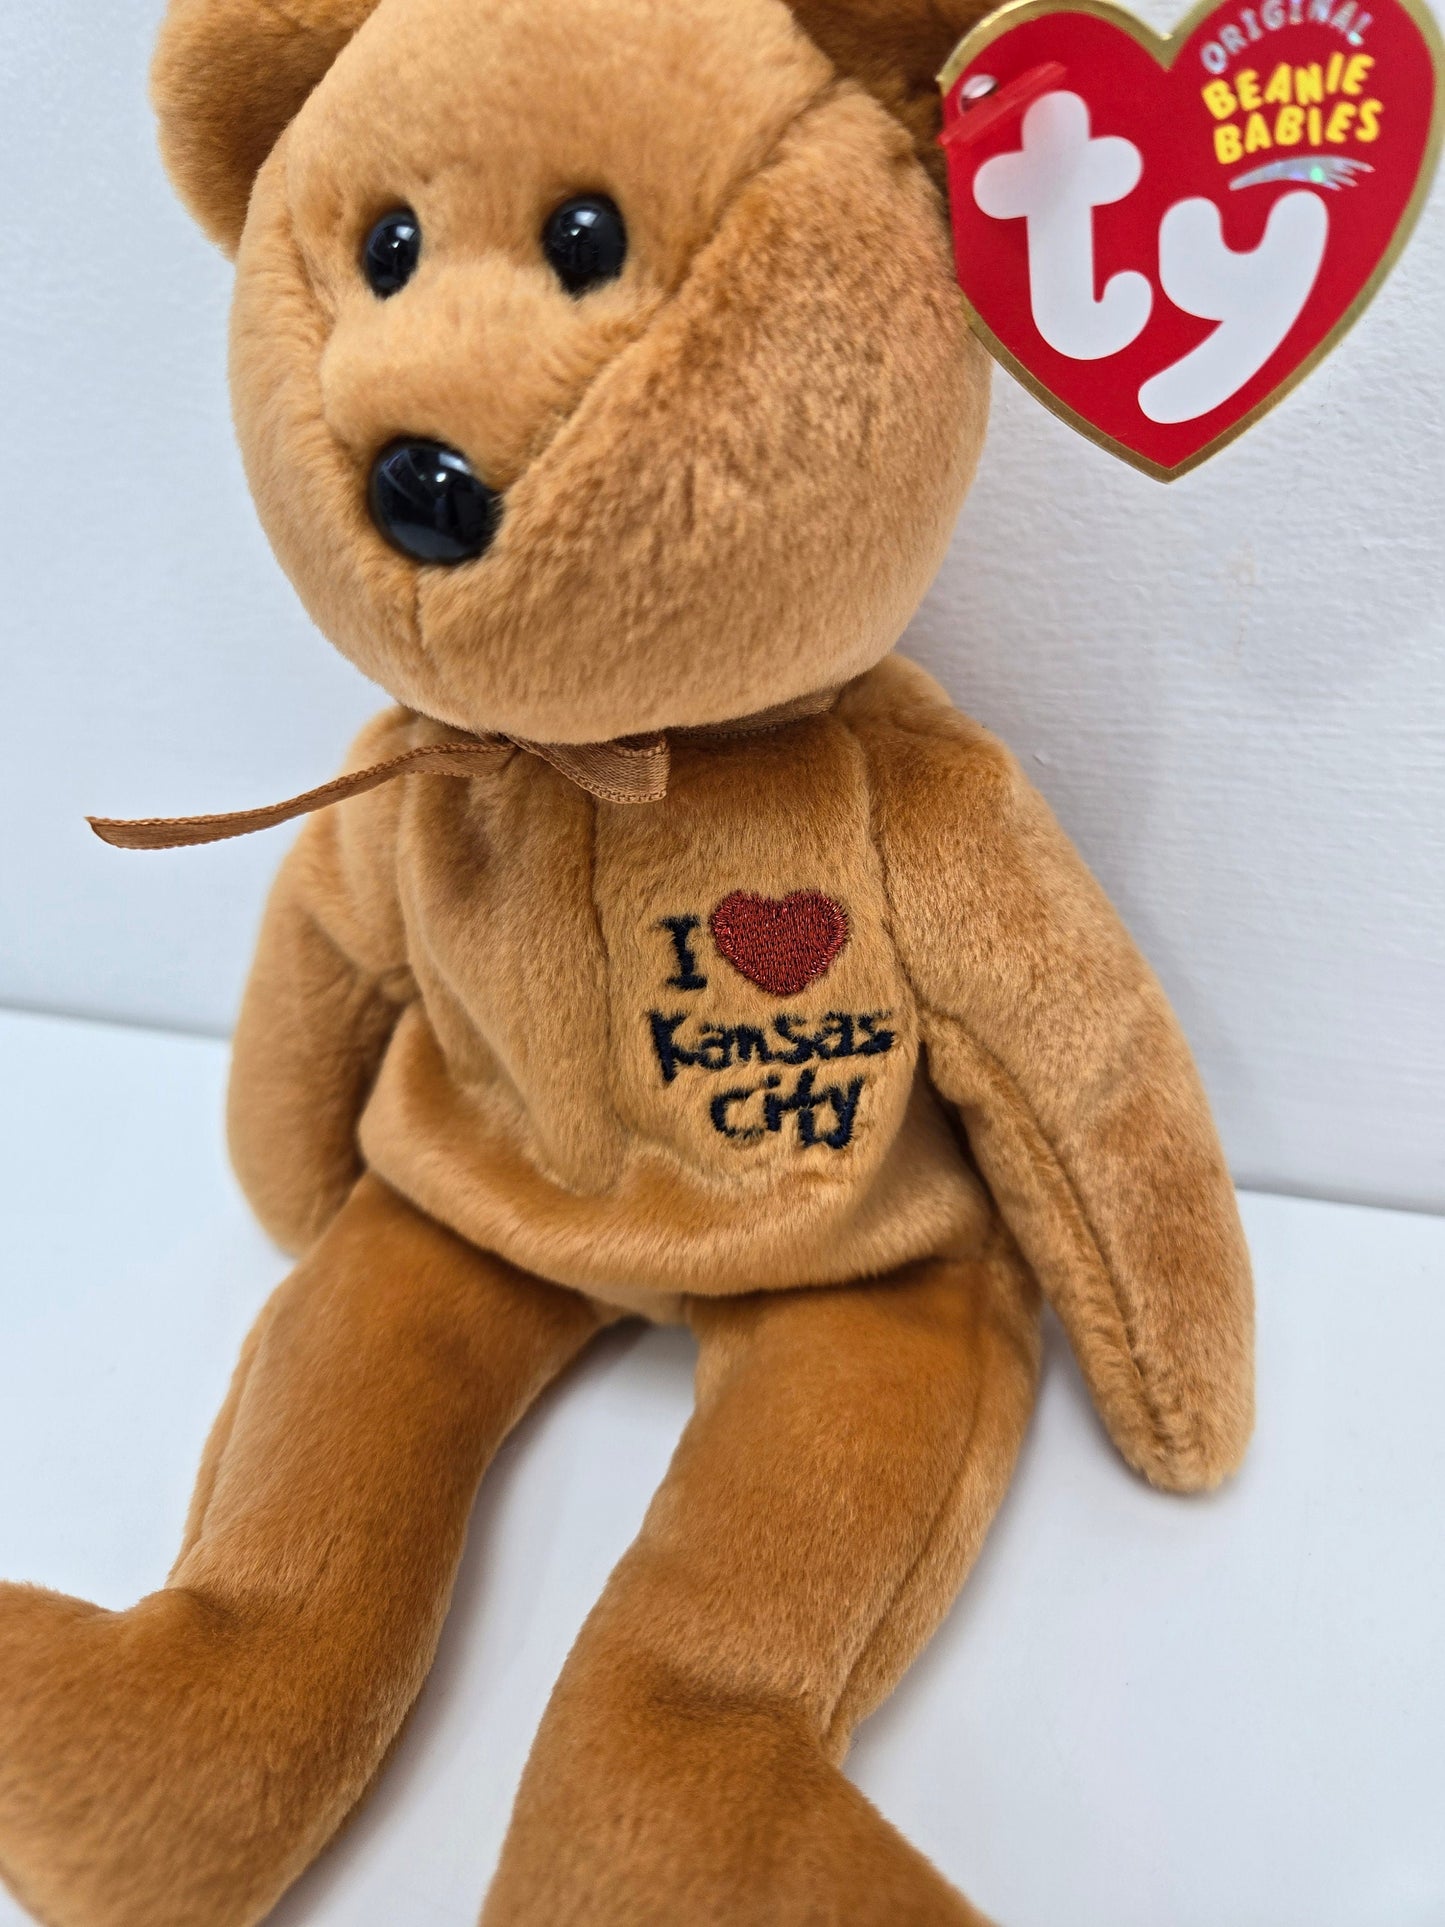 Ty Beanie Baby “Kansas City” the I Love Kansas City Bear - Show Exclusive (8.5 inch)